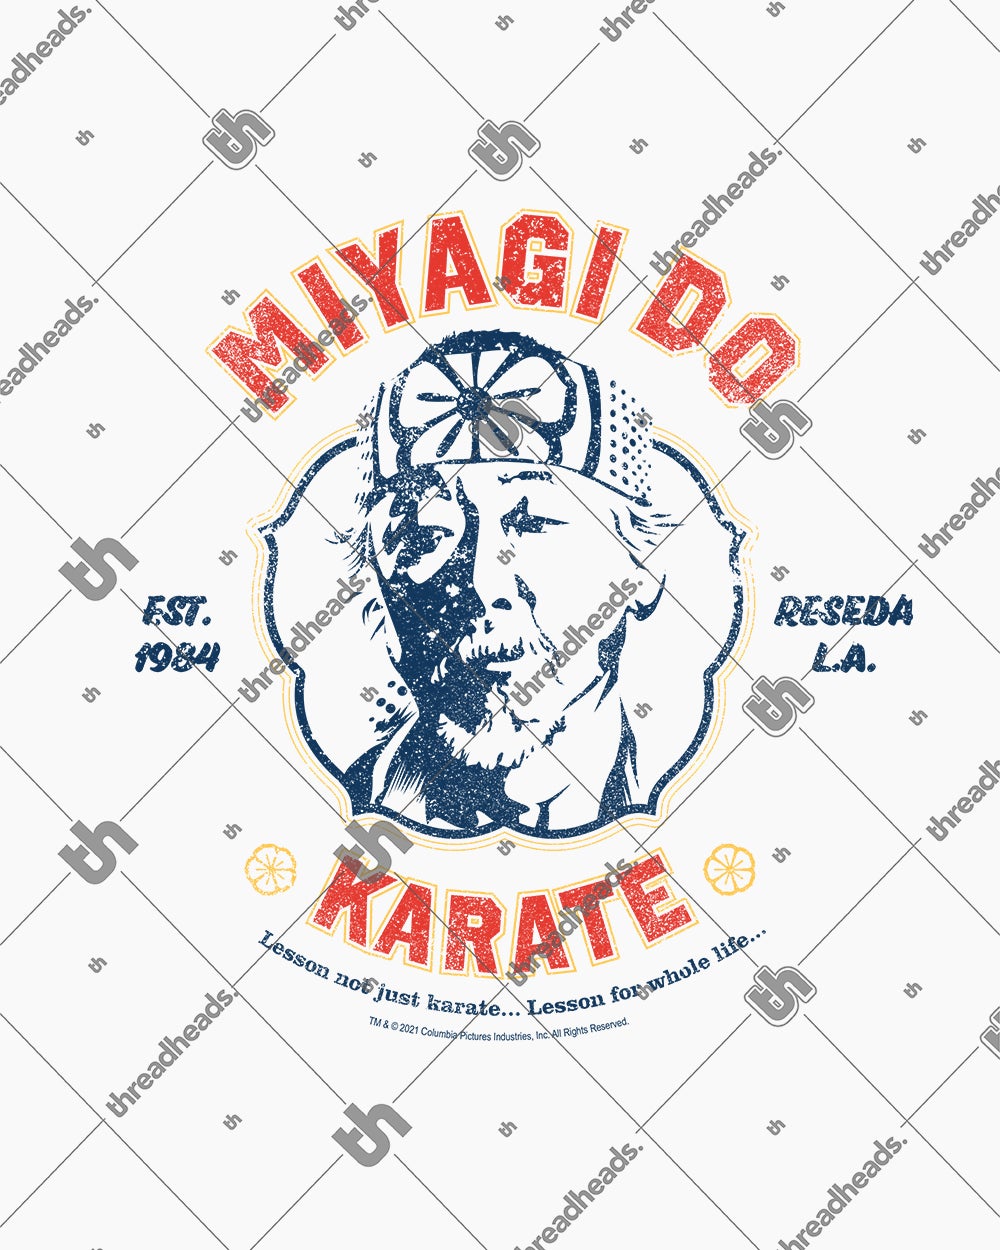 Miyagi Do Not Just Karate T-Shirt Australia Online #colour_white